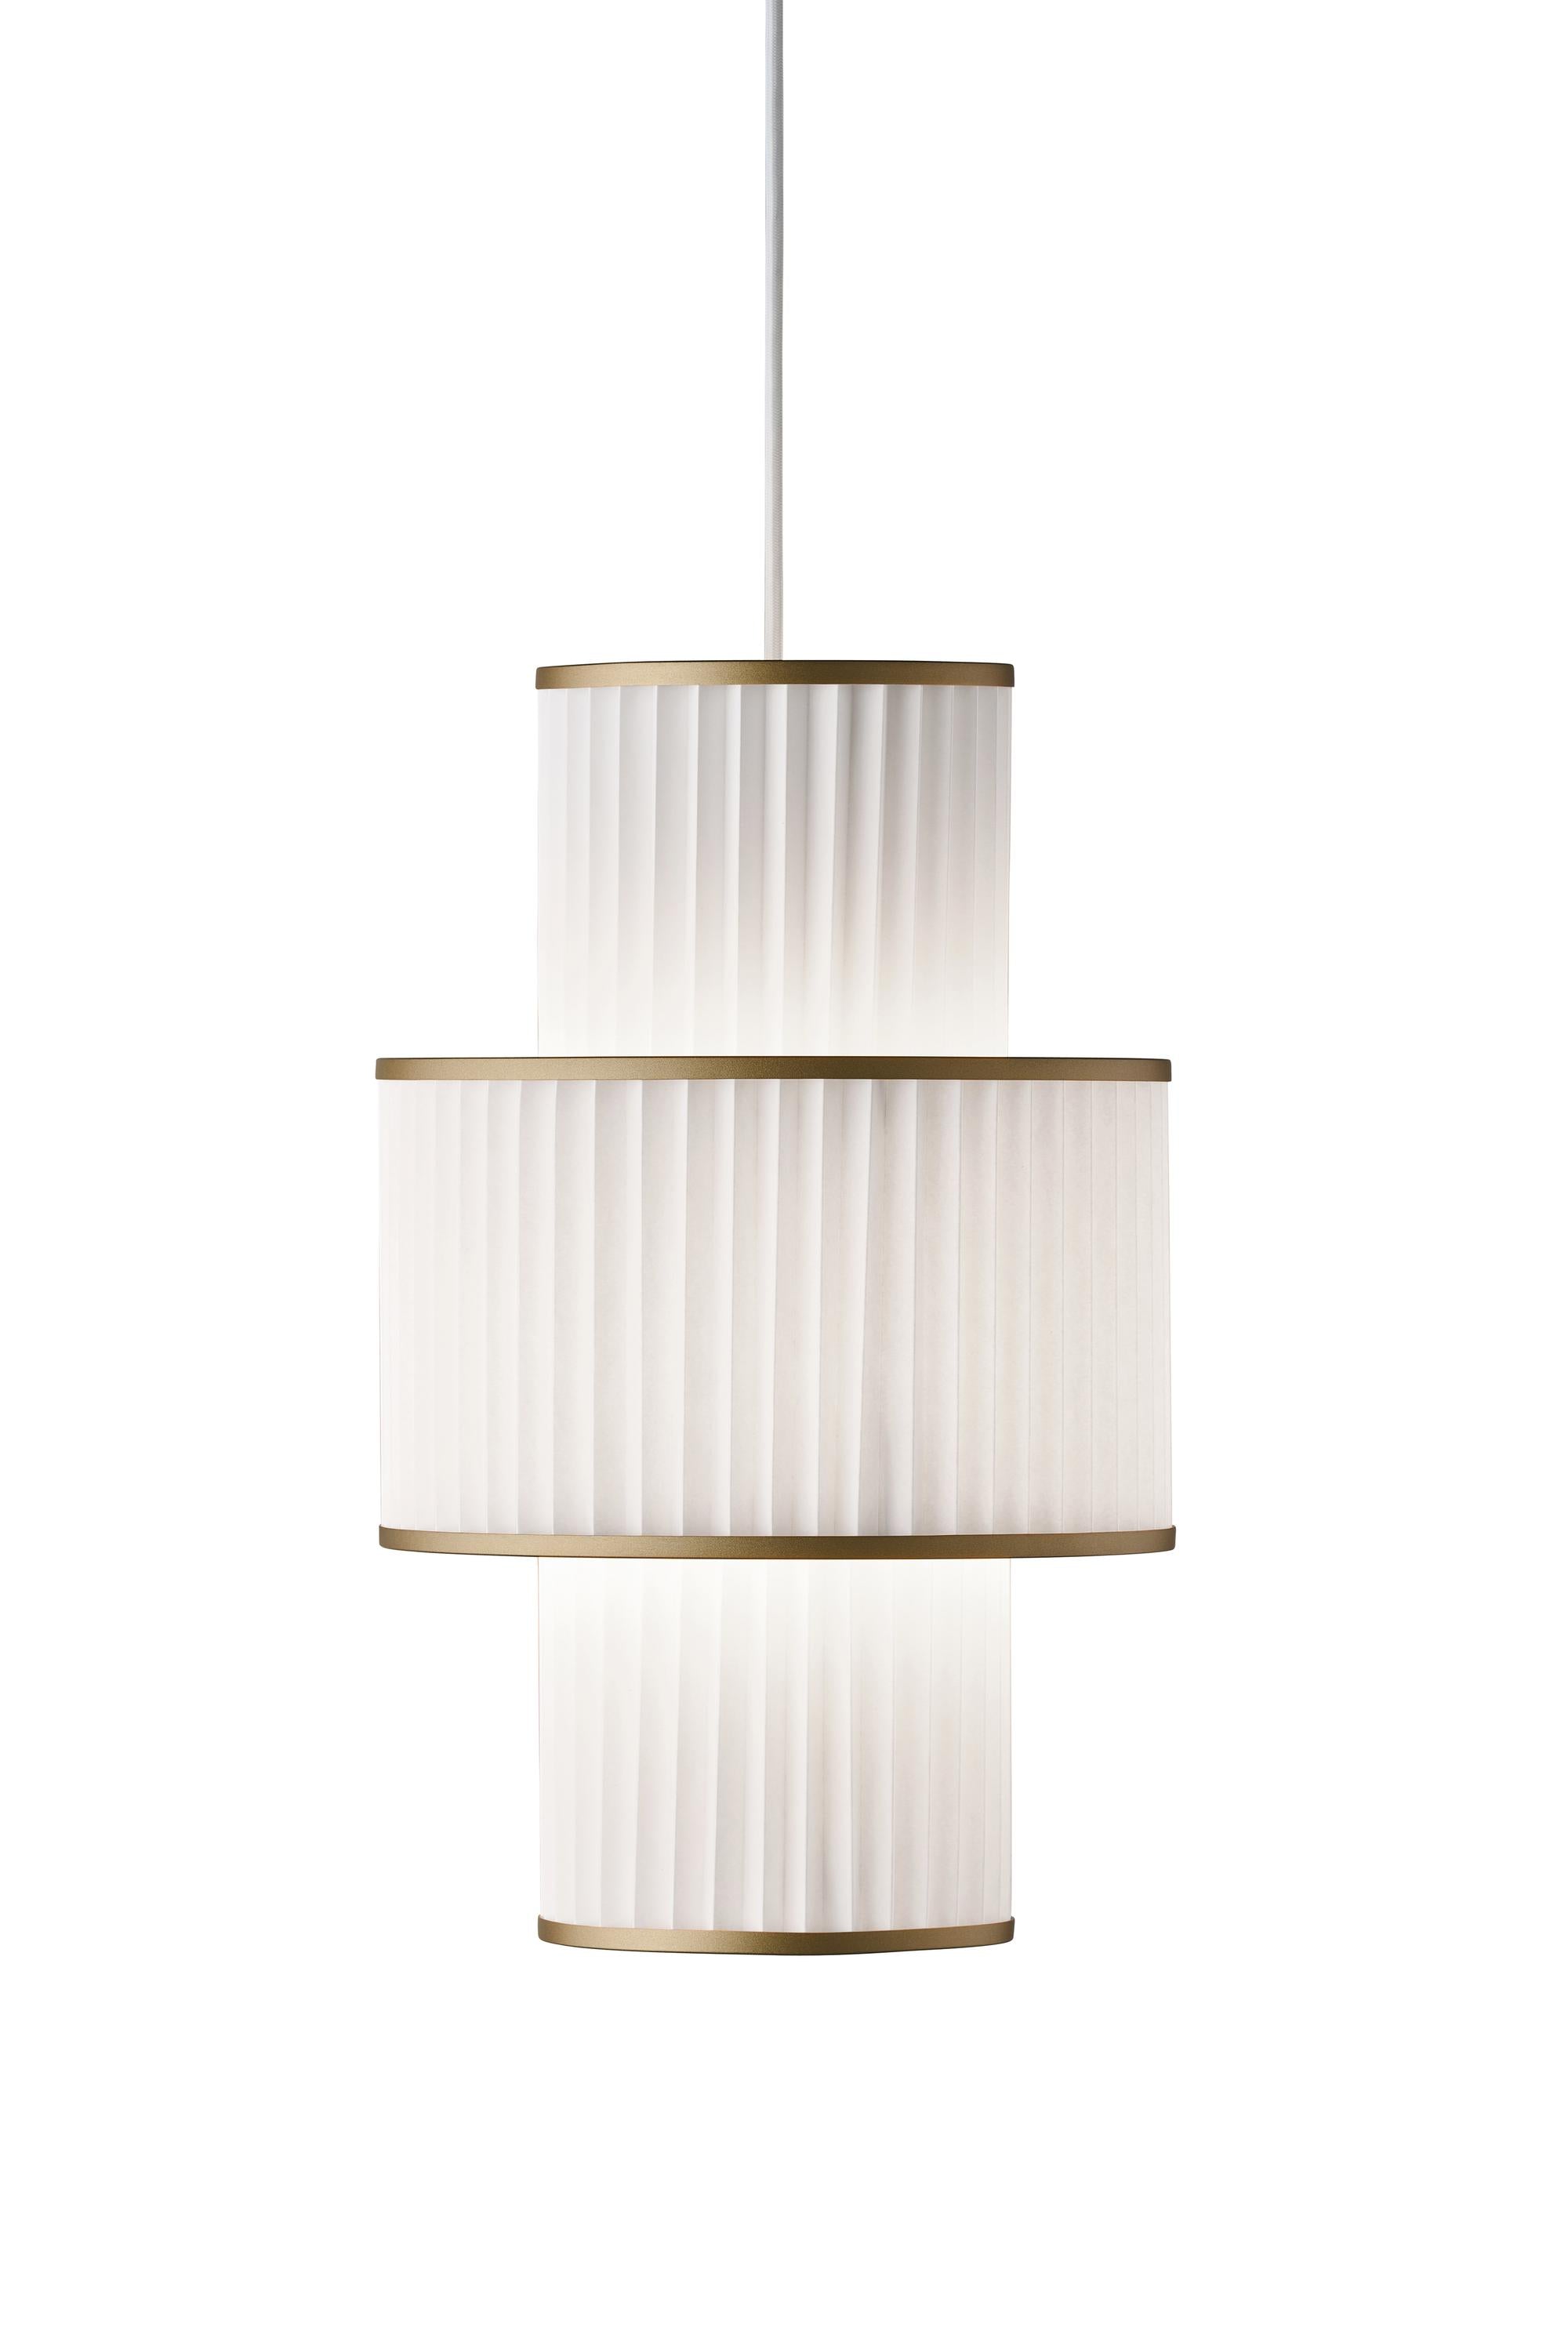 Le Klint Plivello Suspension Lamp Golden/White With 3 Shades (S M S)